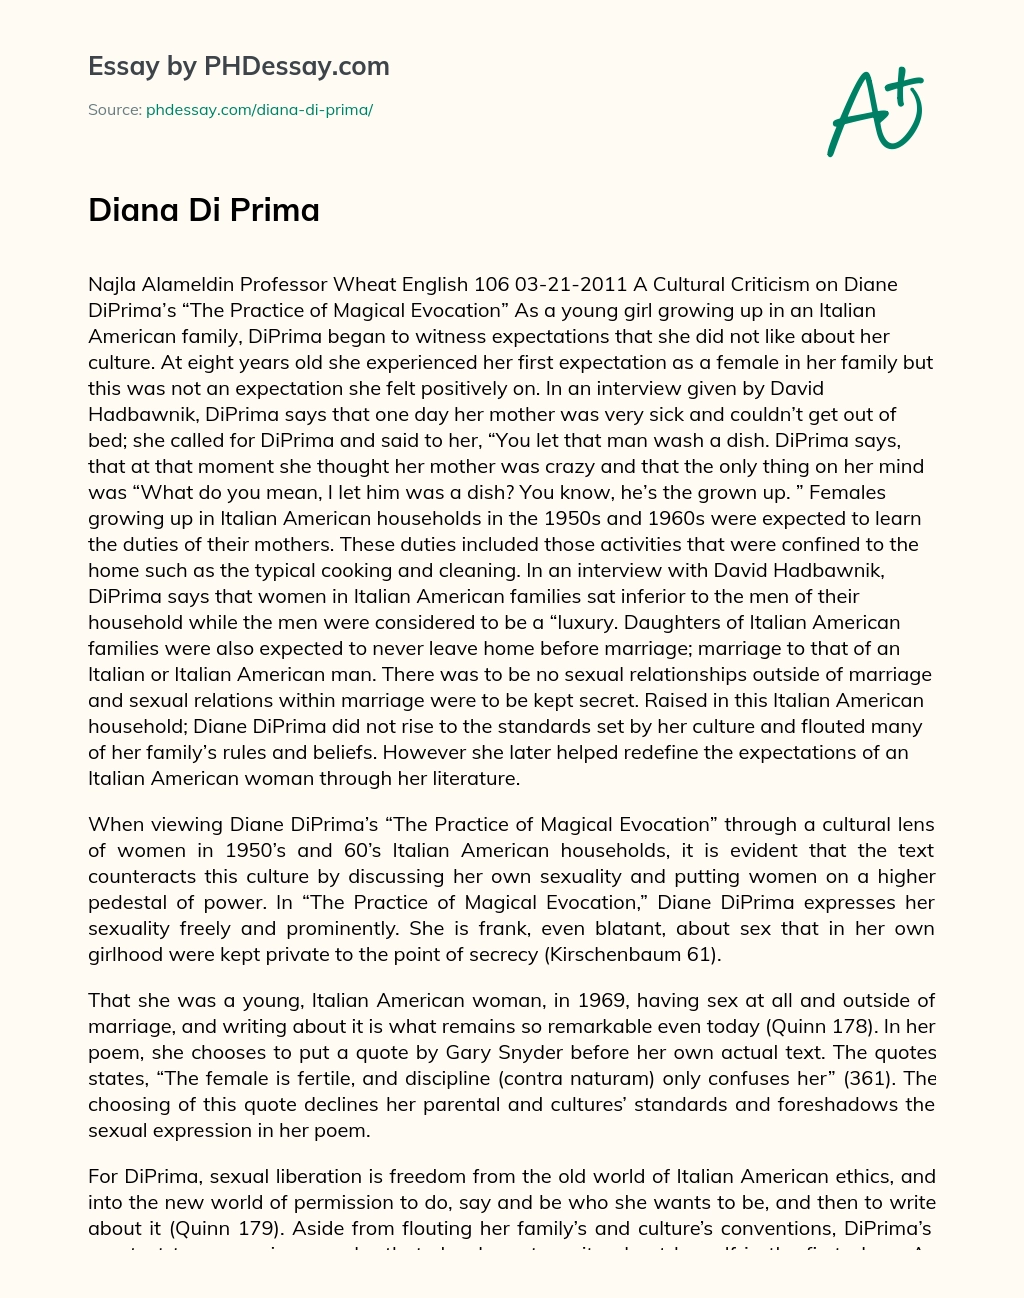 Diana Di Prima essay